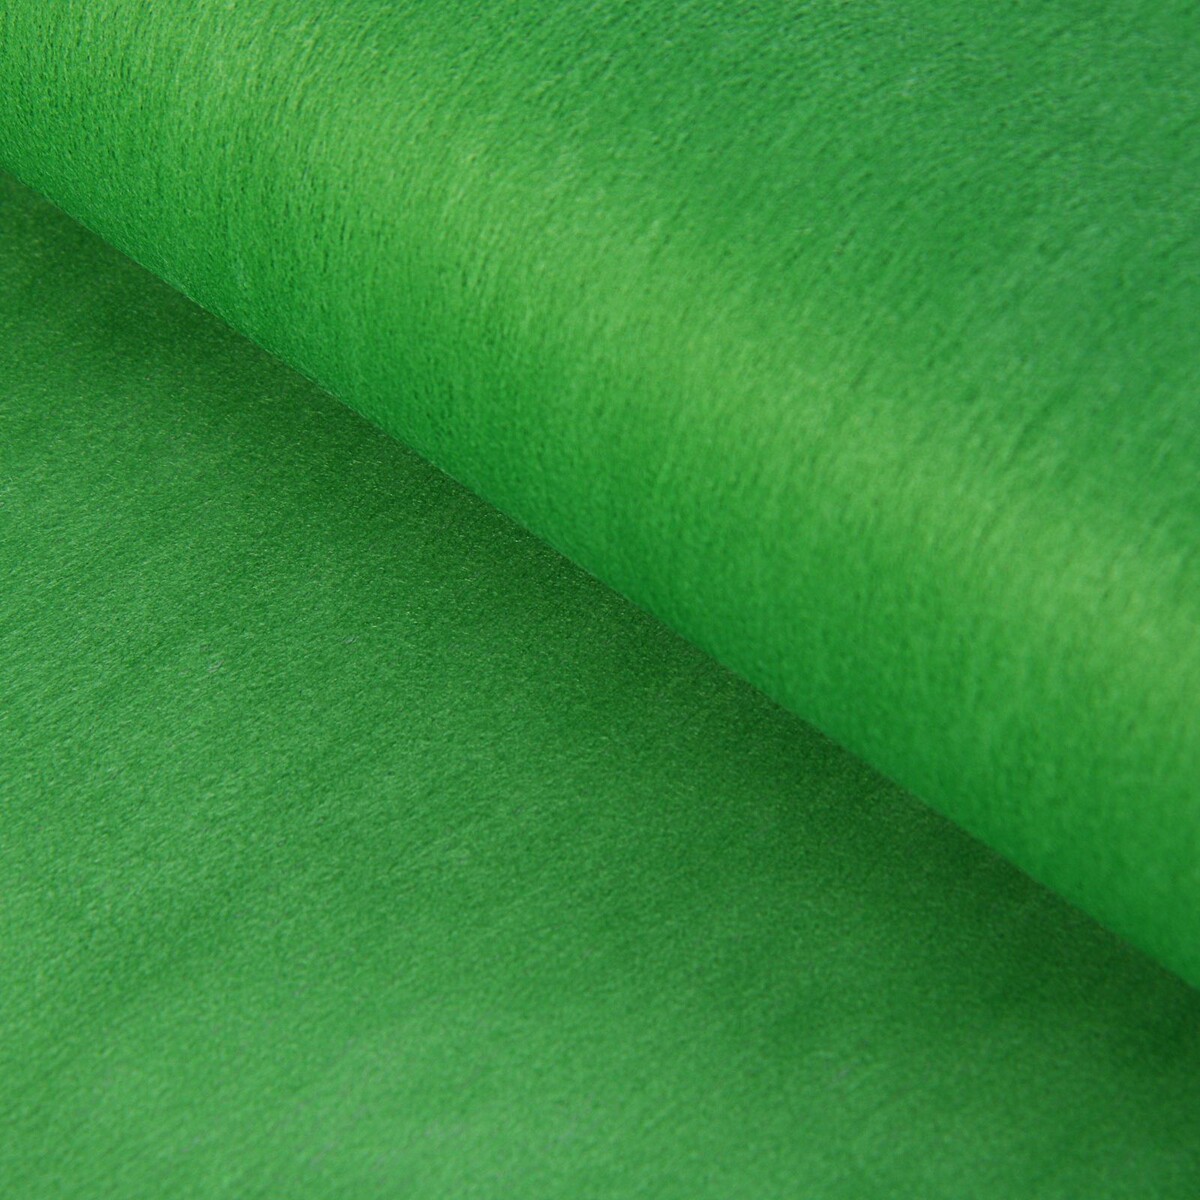 Фетр однотонный, зеленый, 50 см x 15 м фетр для упаковок и поделок однотонный голубой двусторонний рулон 1шт 50 см x 15 м